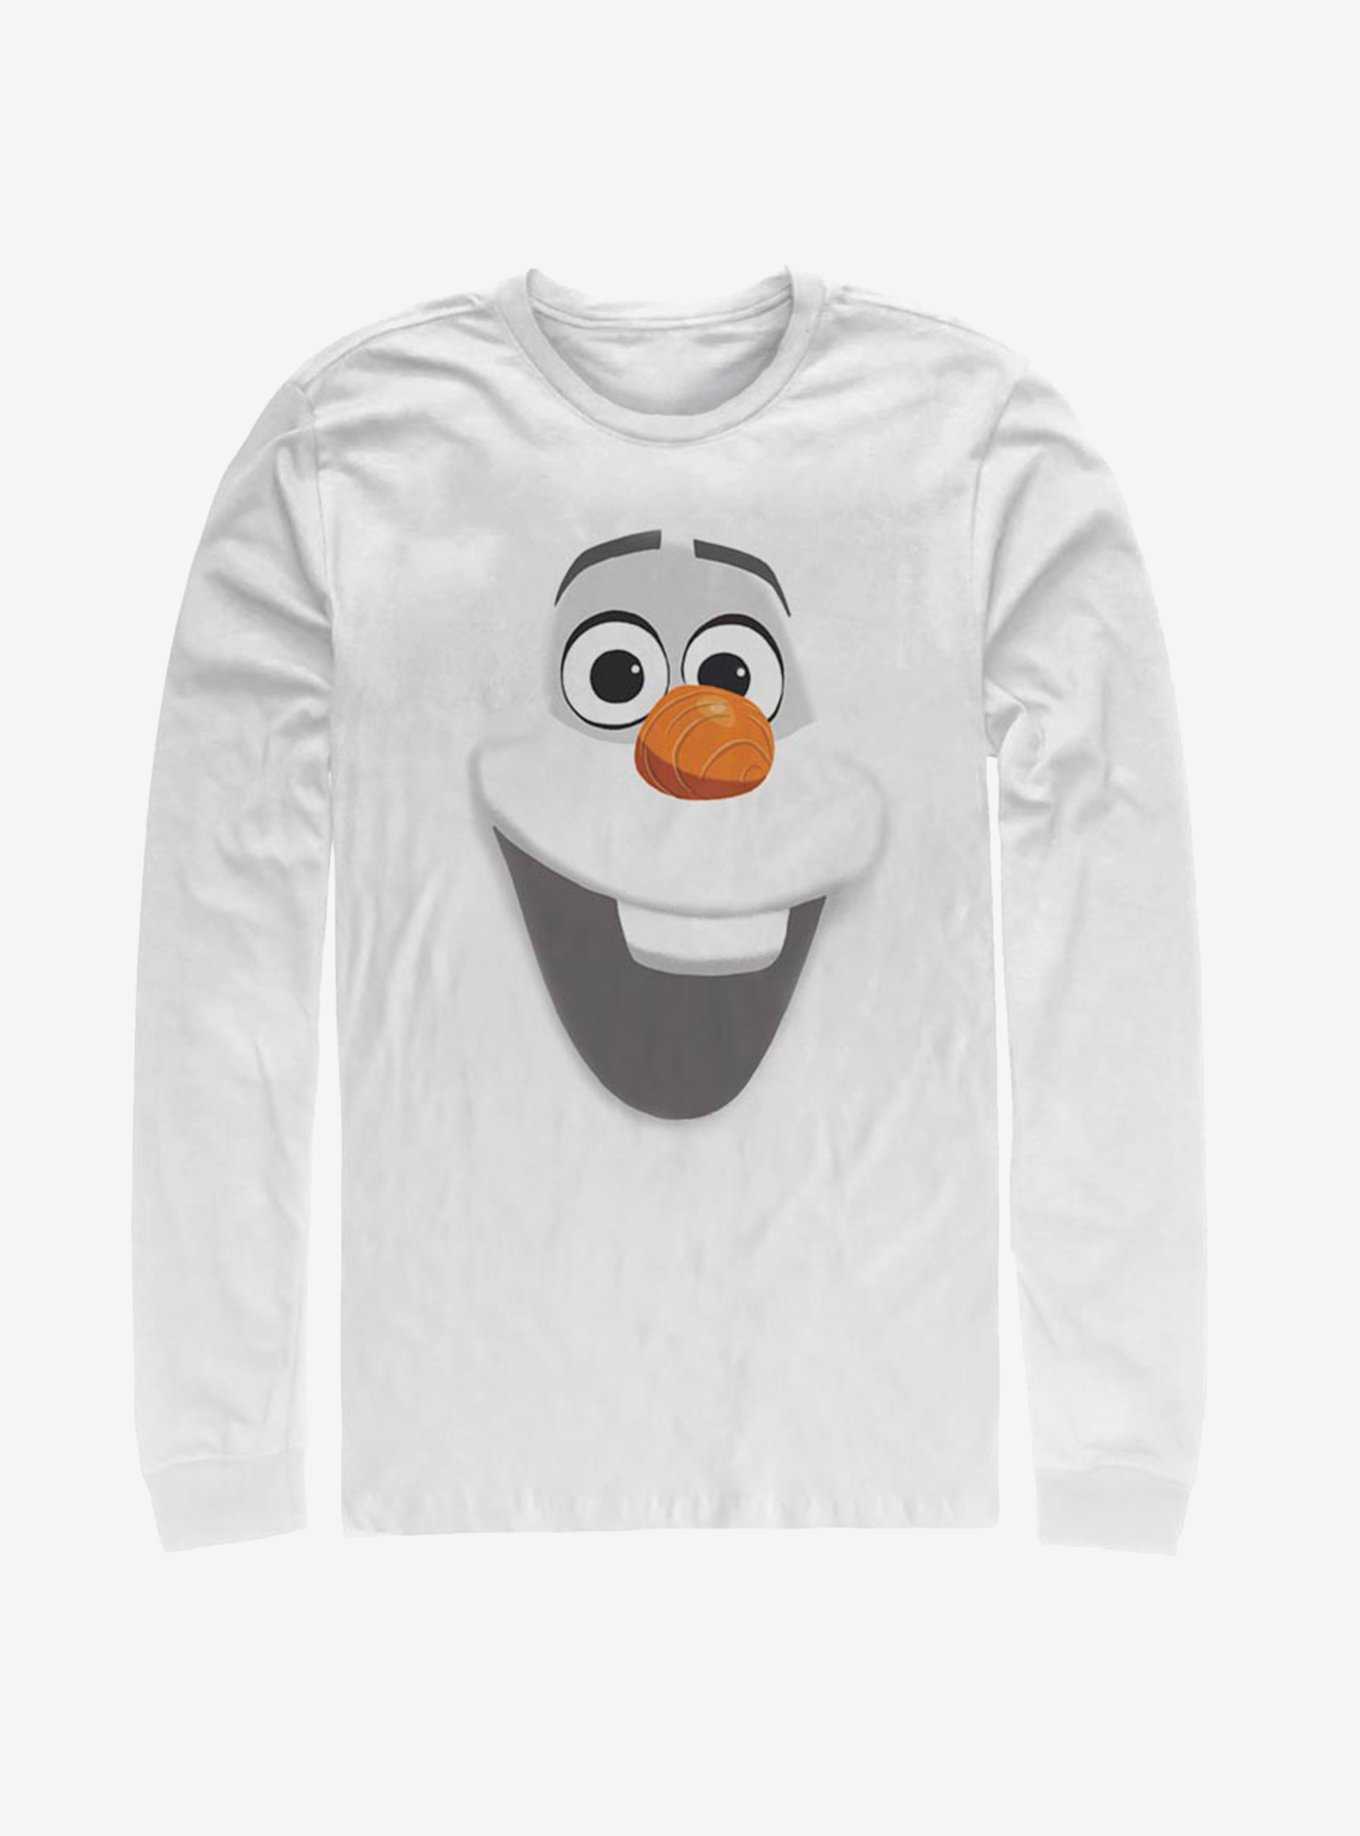 Disney Frozen Olaf Face Long-Sleeve T-Shirt, , hi-res